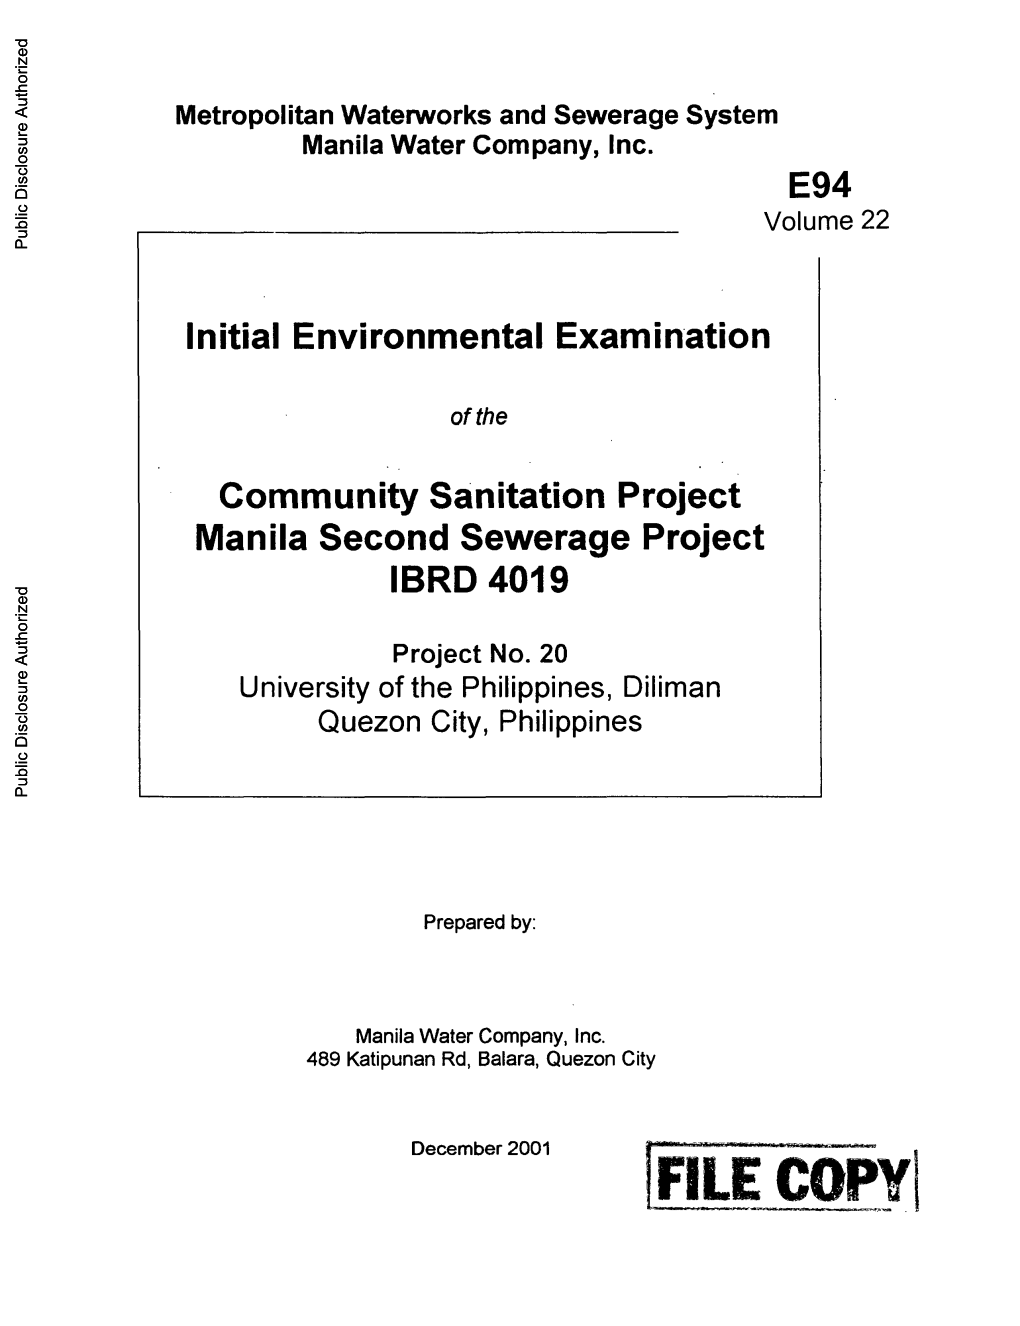 Initial Environmental Examination of The